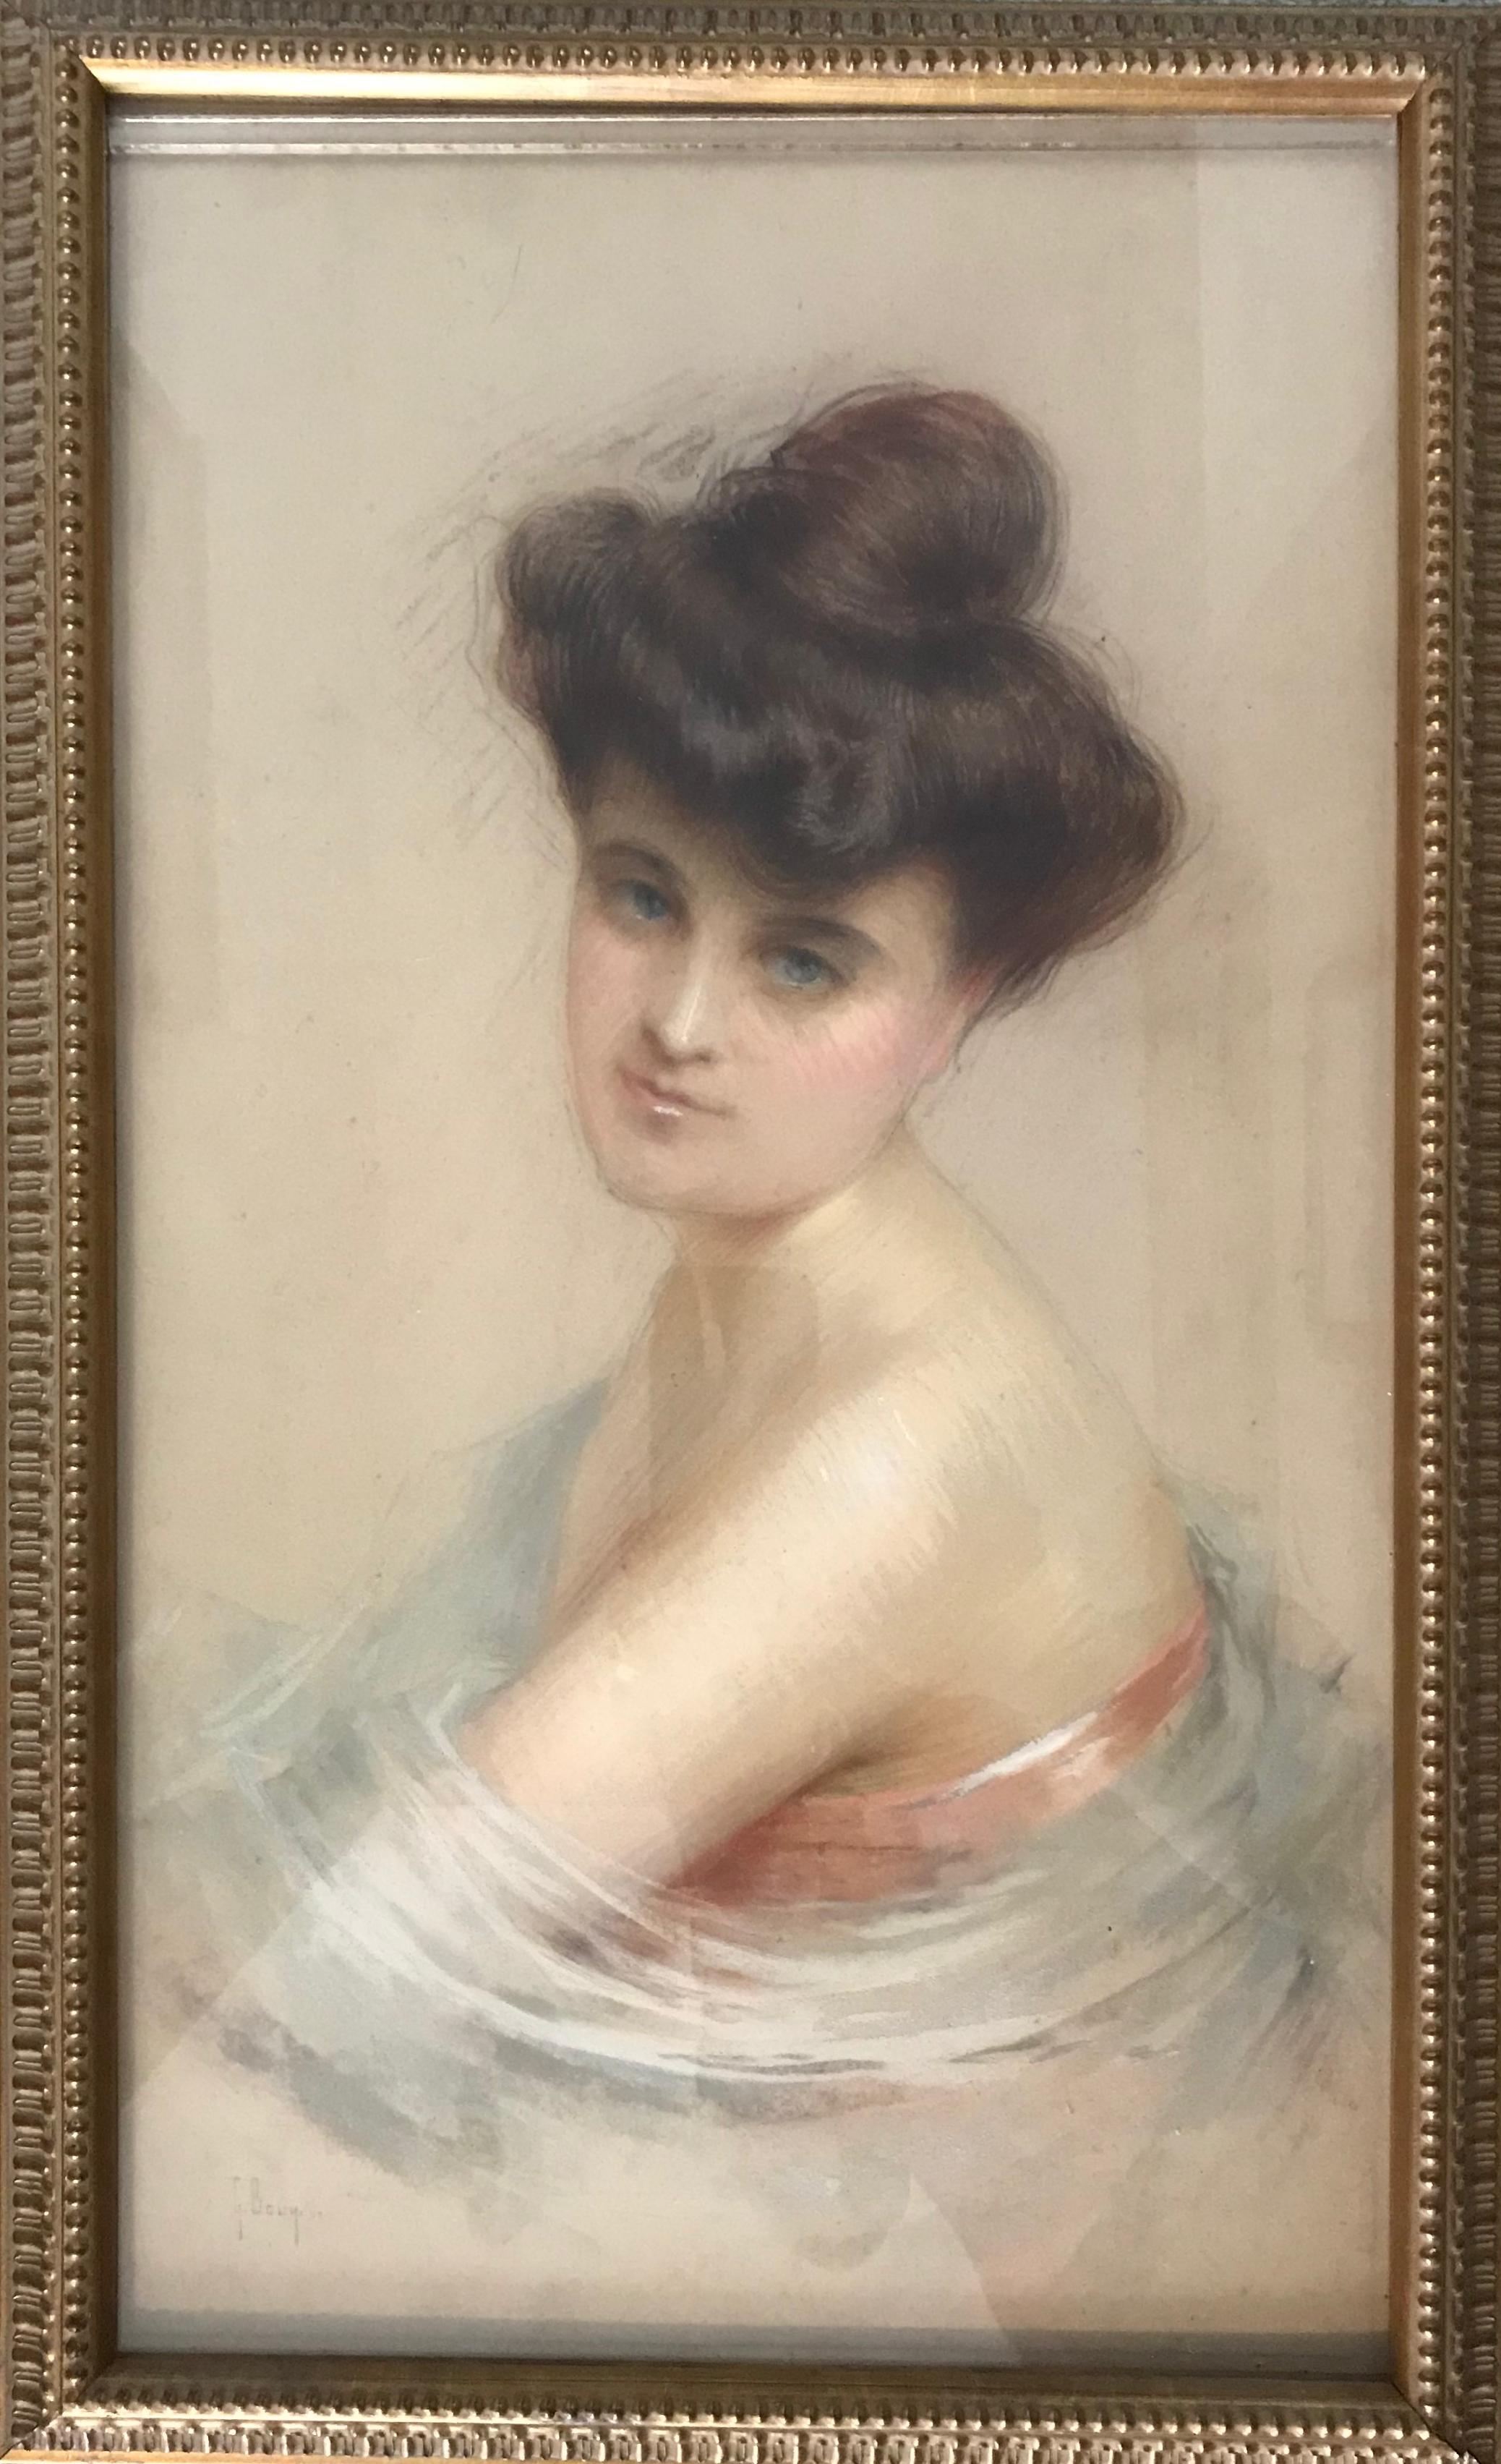 Gaston Bouy Portrait – „“Demoiselle““ – gerahmtes pastellfarbenes Frauenporträt des frühen 20. Jahrhunderts